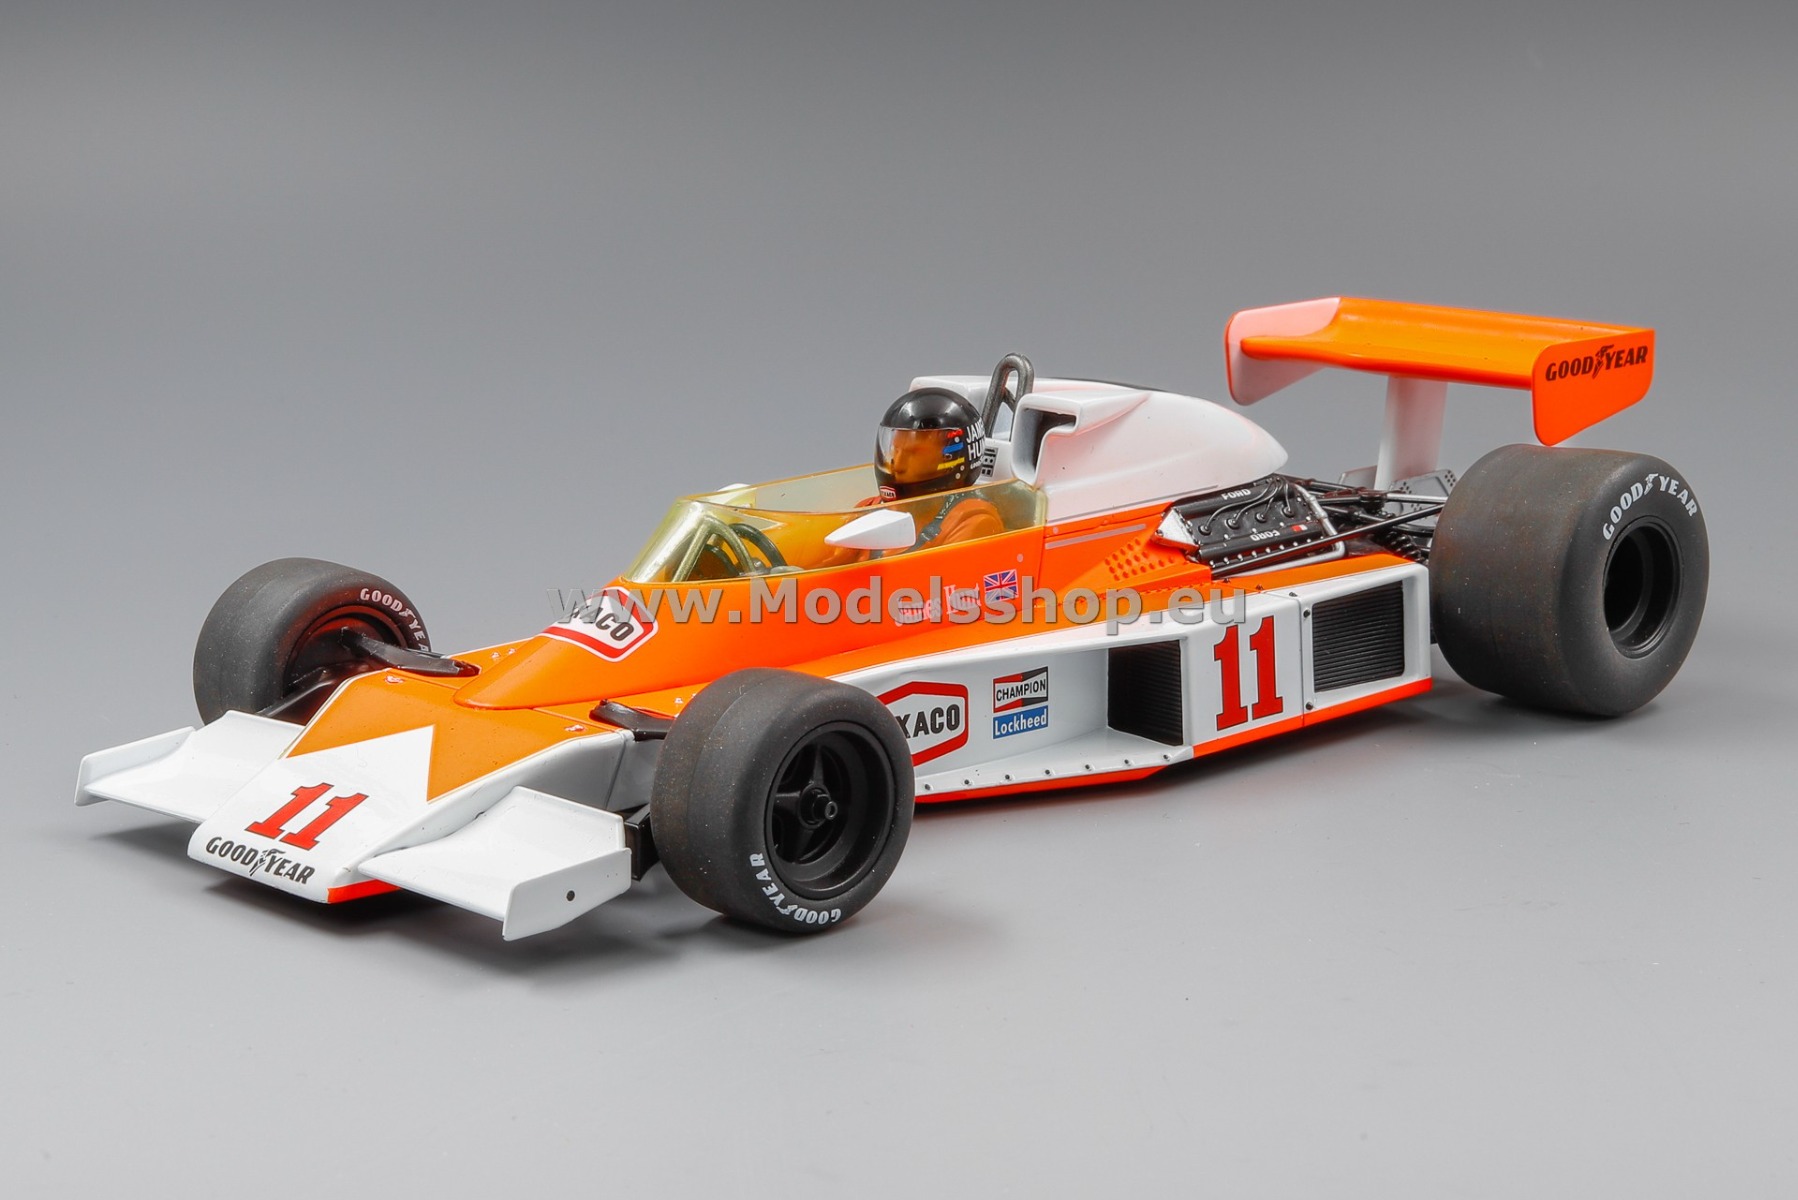 MCG 18612F McLaren M23, No.11, Marlboro team McLaren, Formula 1, GP France 1976, J.Hunt (with Decals)